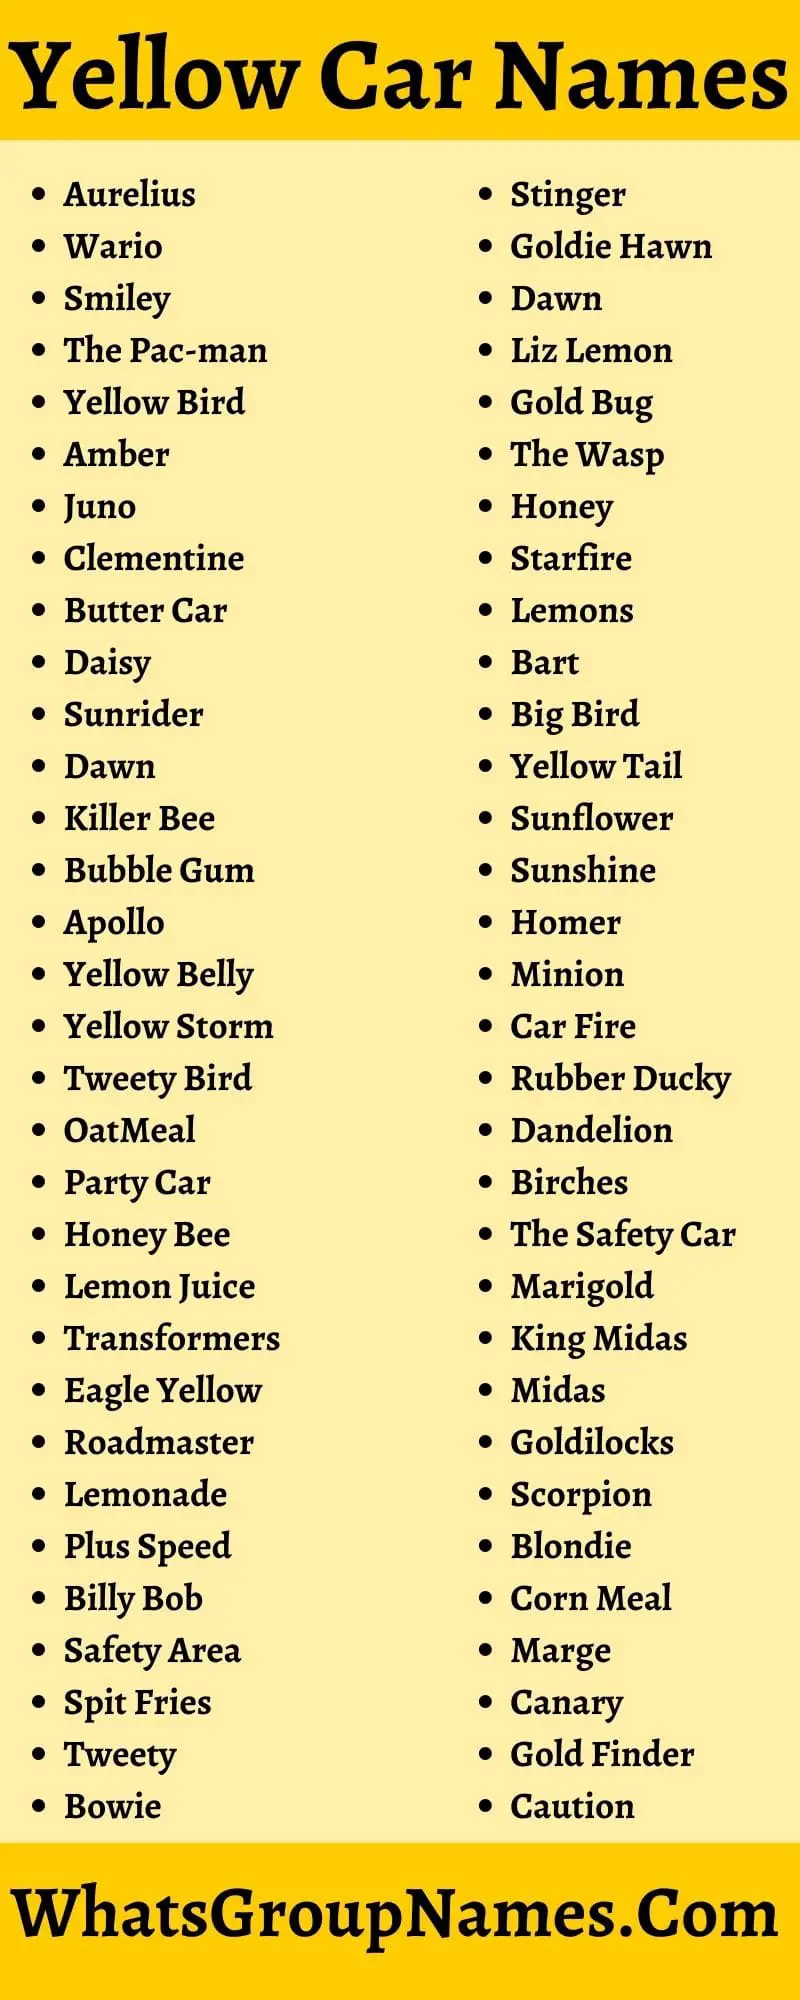 Yellow Car Names